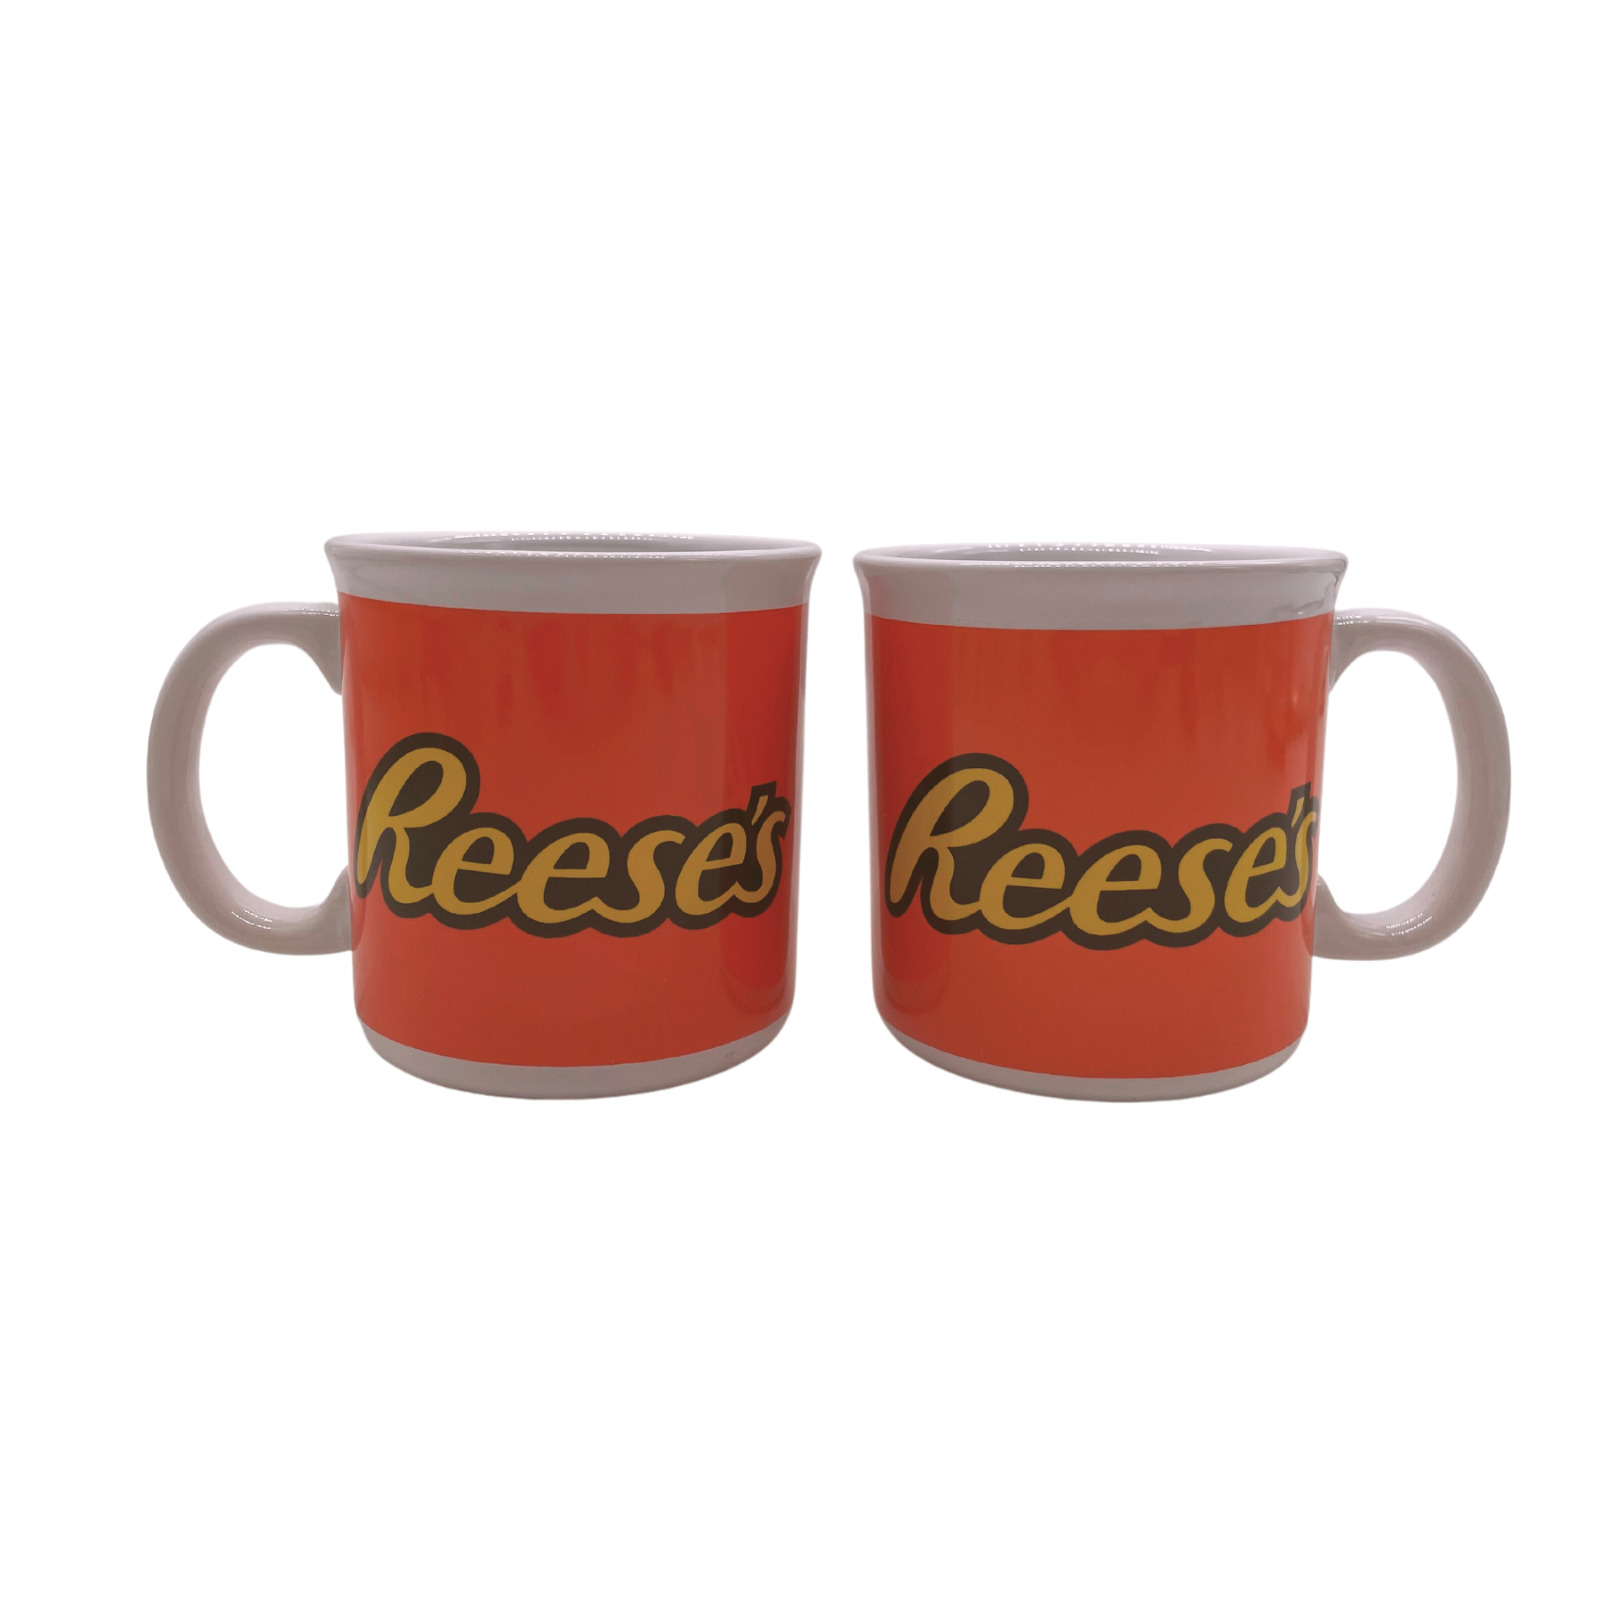 Set of 2 Reese's Coffee Mug, 10 oz, Hot/Cold Beverages